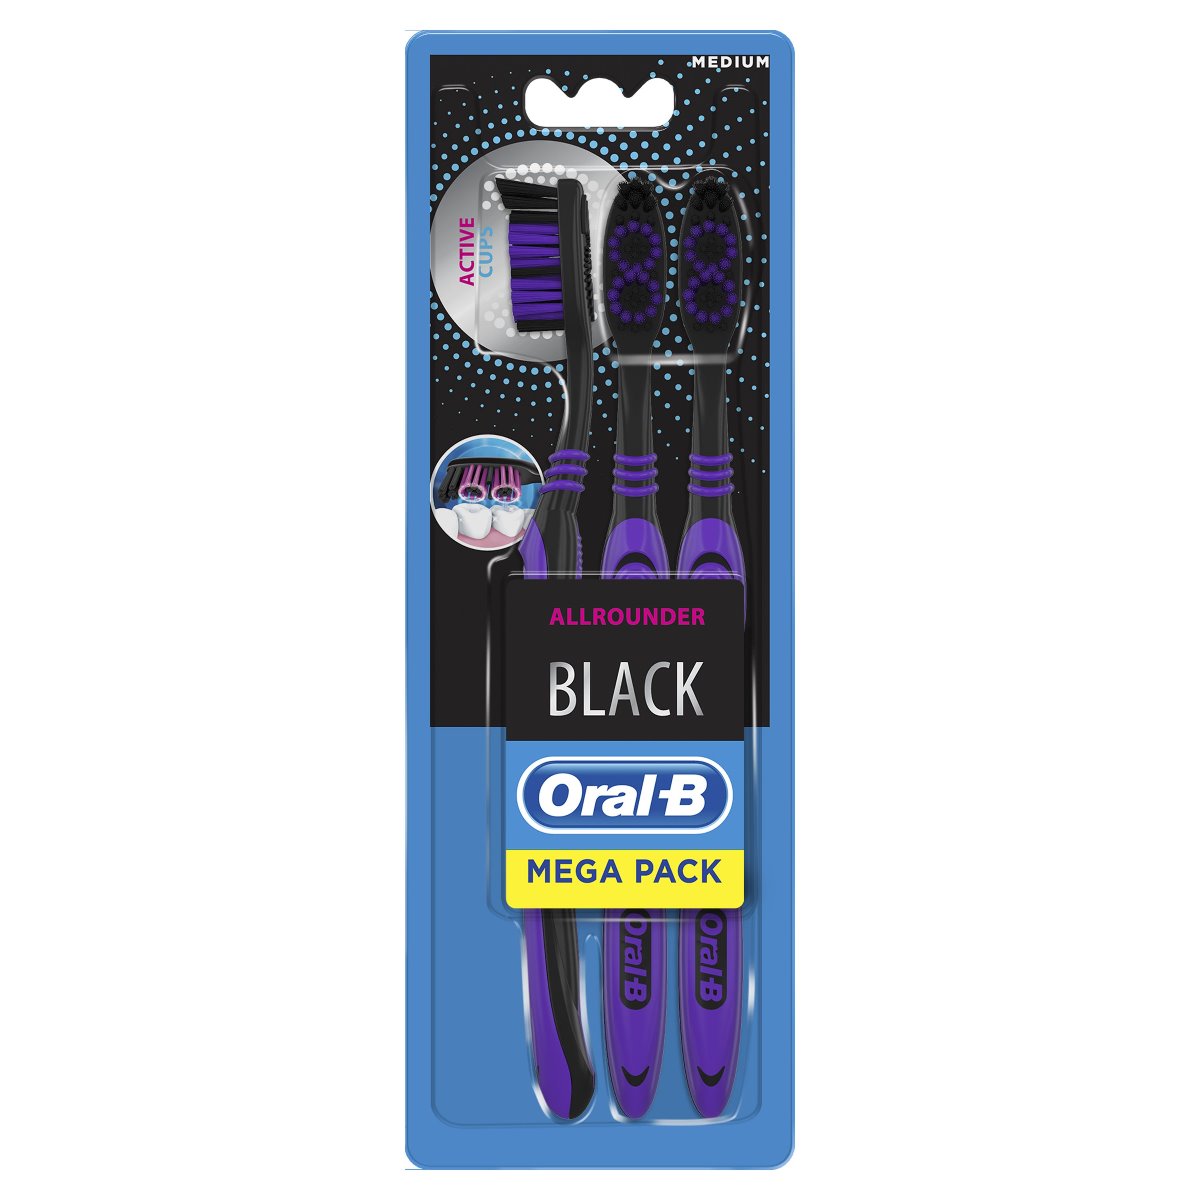 Oral-B Allrounder Black zubní kartáček 3 ks Oral-B